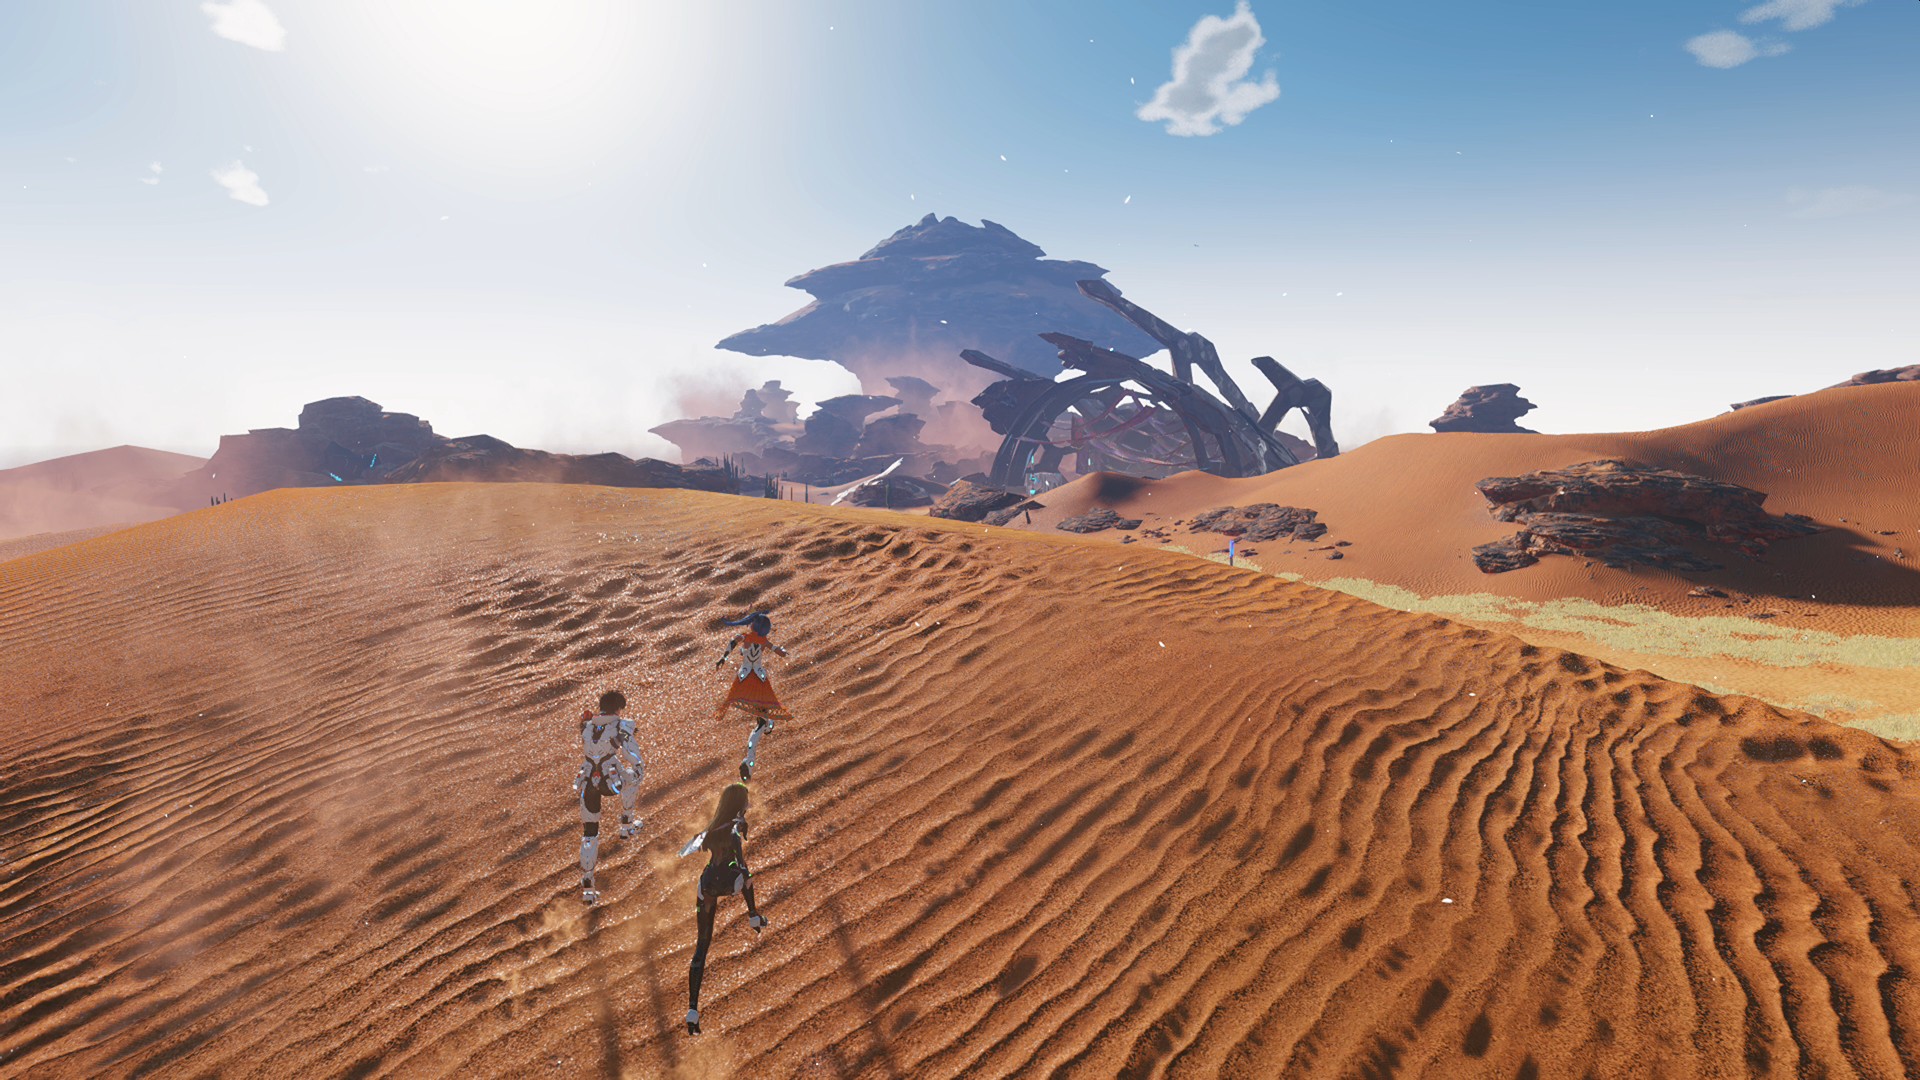 Phantasy Star Online 2 New Genesis: The Sands of Retem